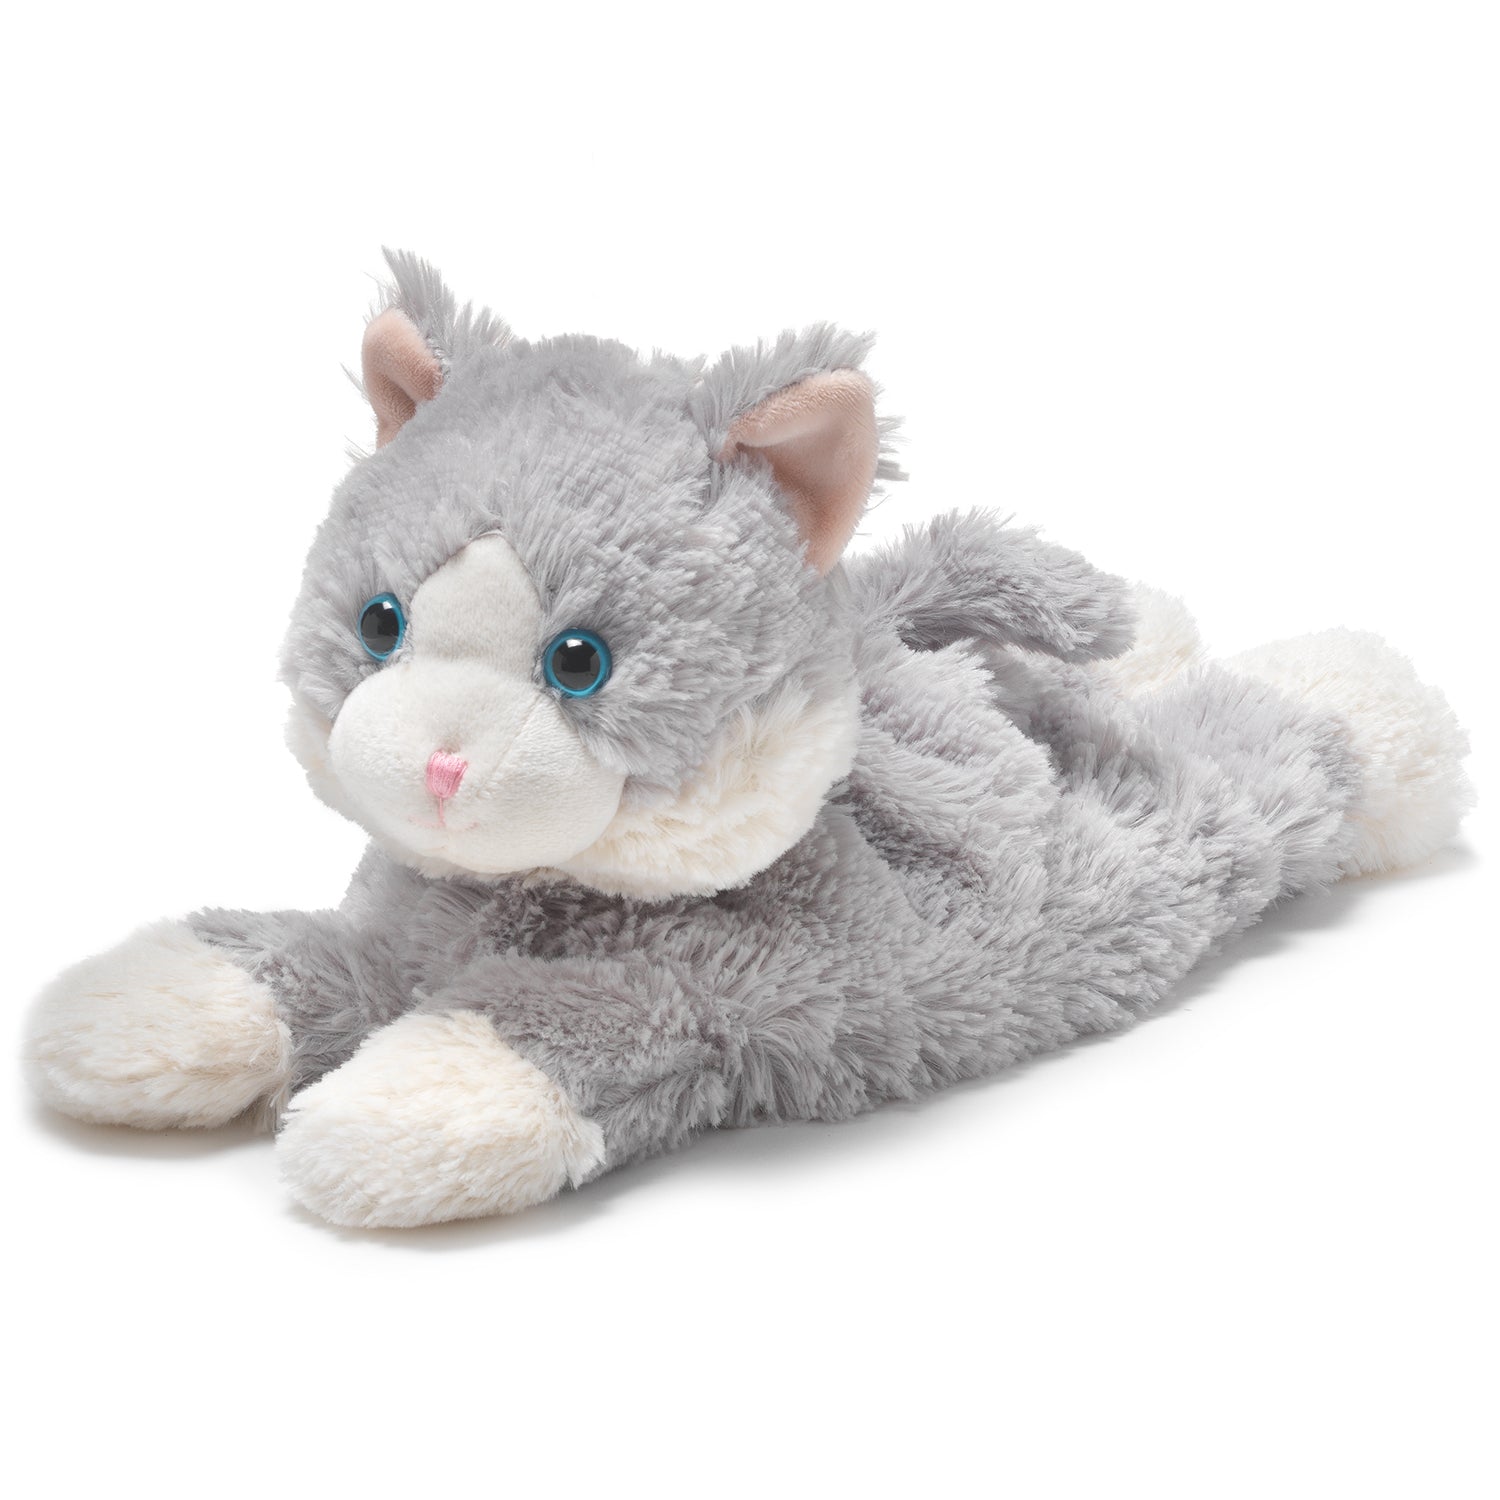 Warmies Plush Animal - Grey Cat